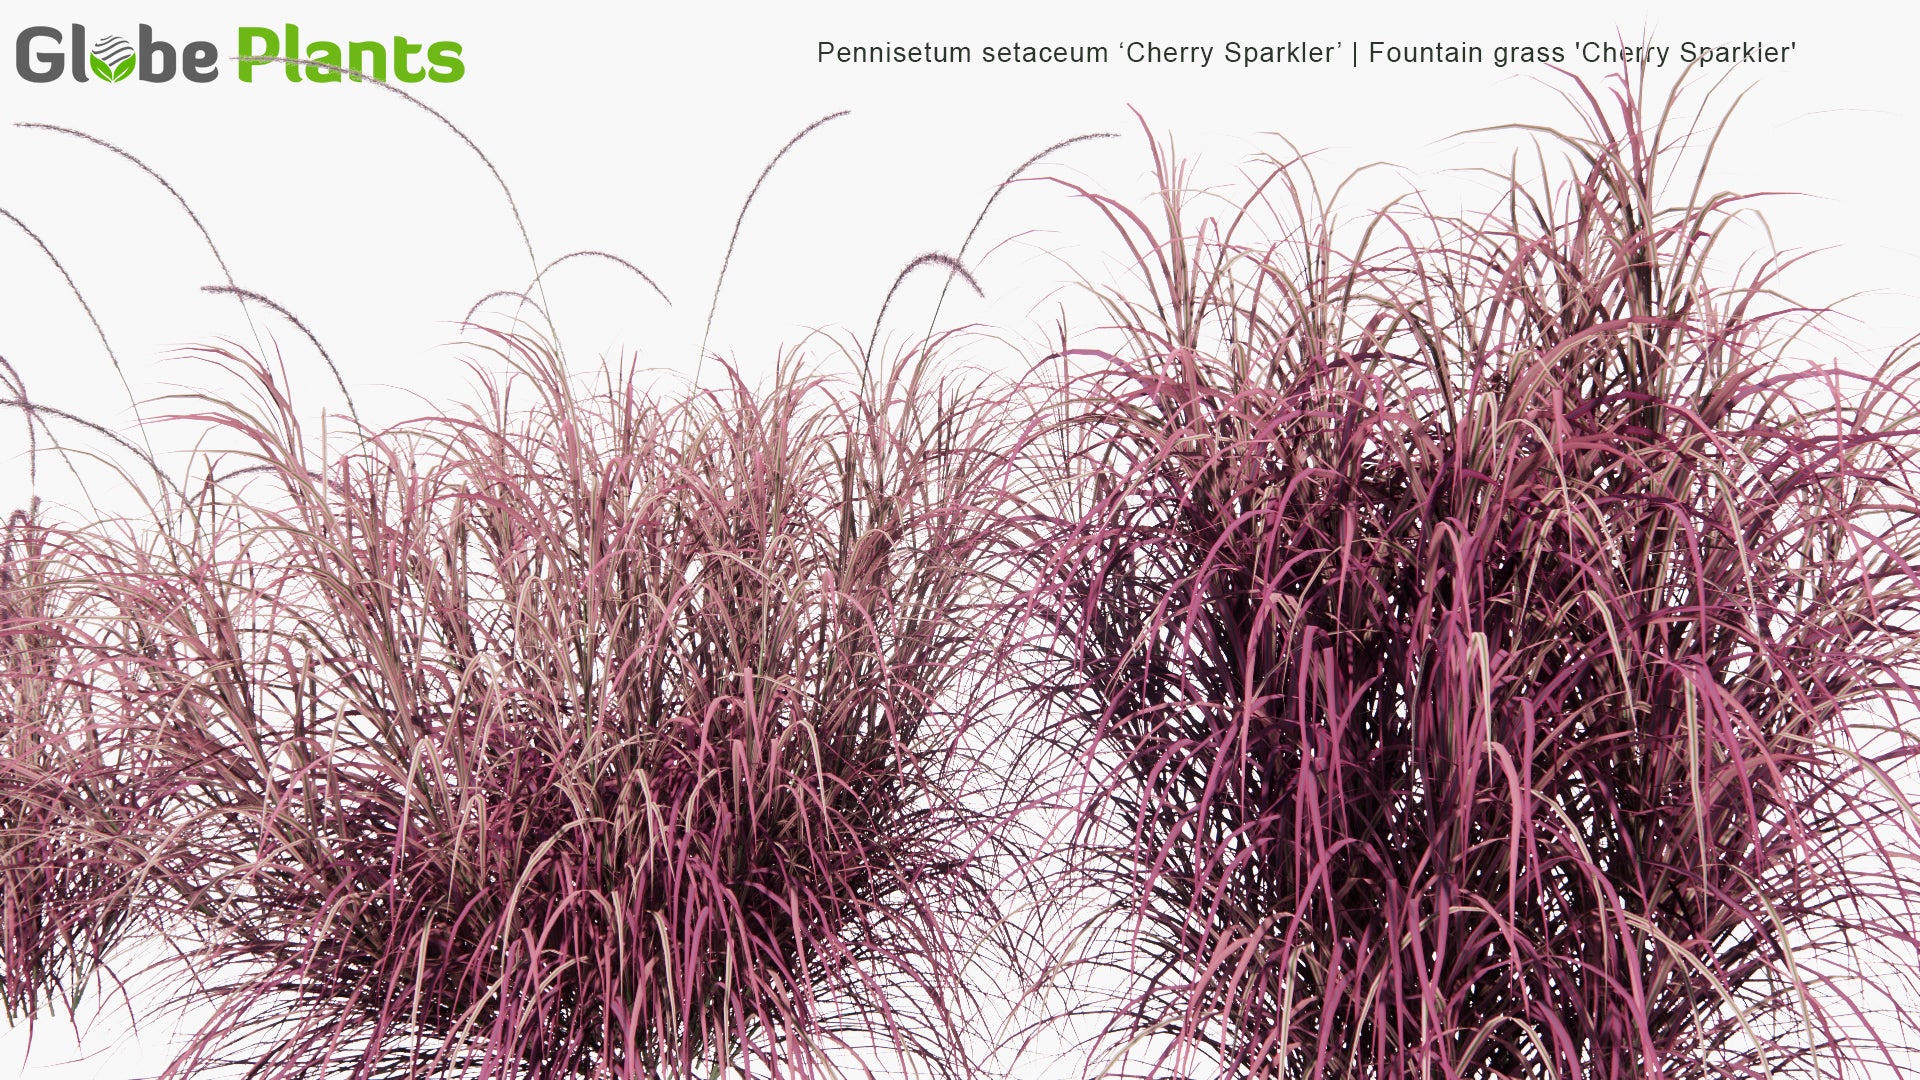 Low Poly Pennisetum Setaceum ‘Cherry Sparkler’ - Fountain Grass 'Cherry Sparkler' (3D Model)